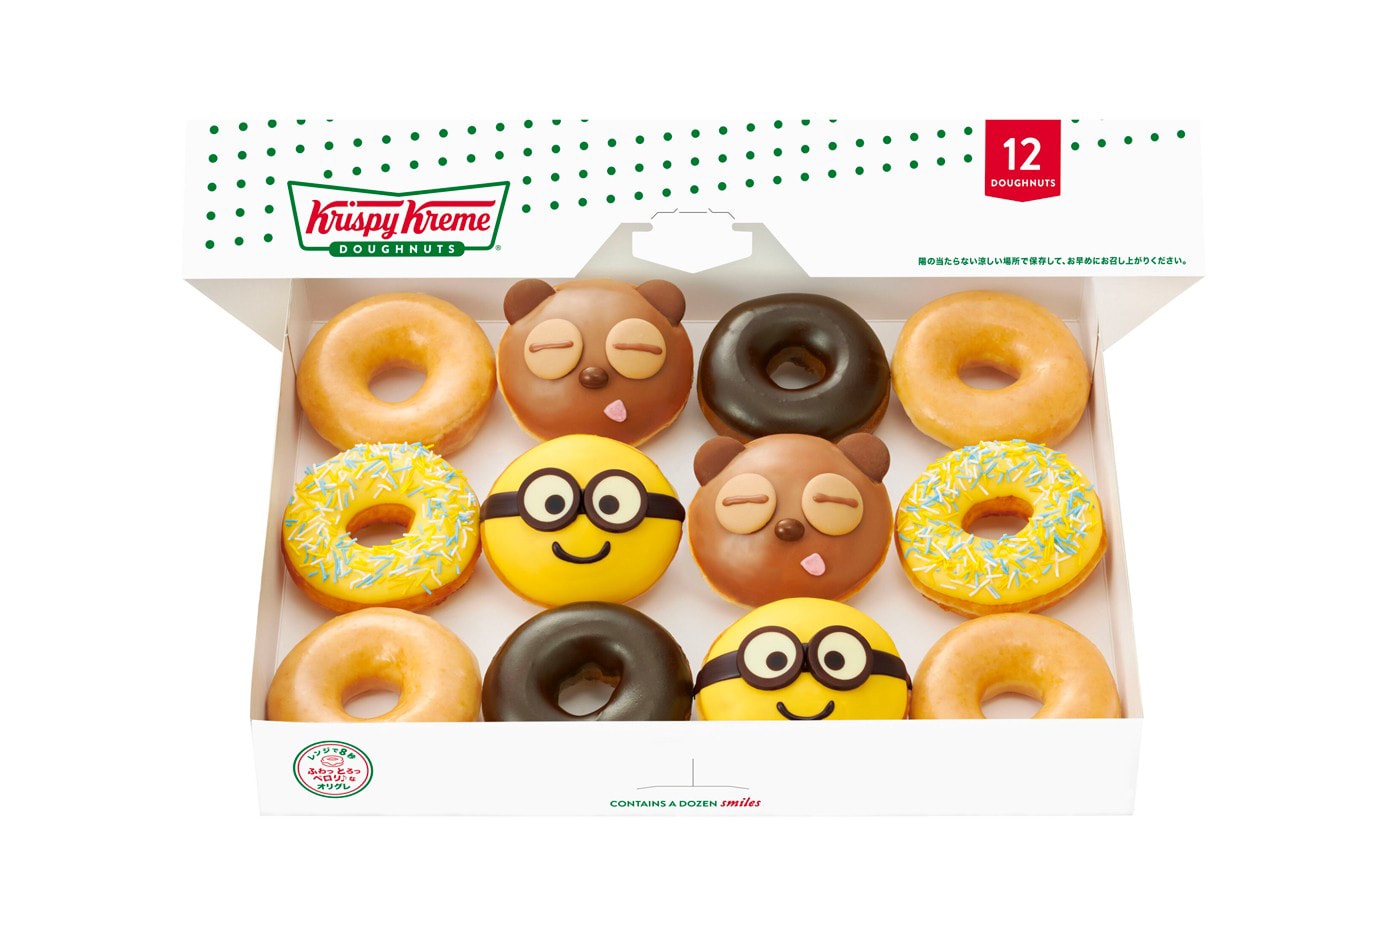 Krispy Kreme Japan Minions Donuts